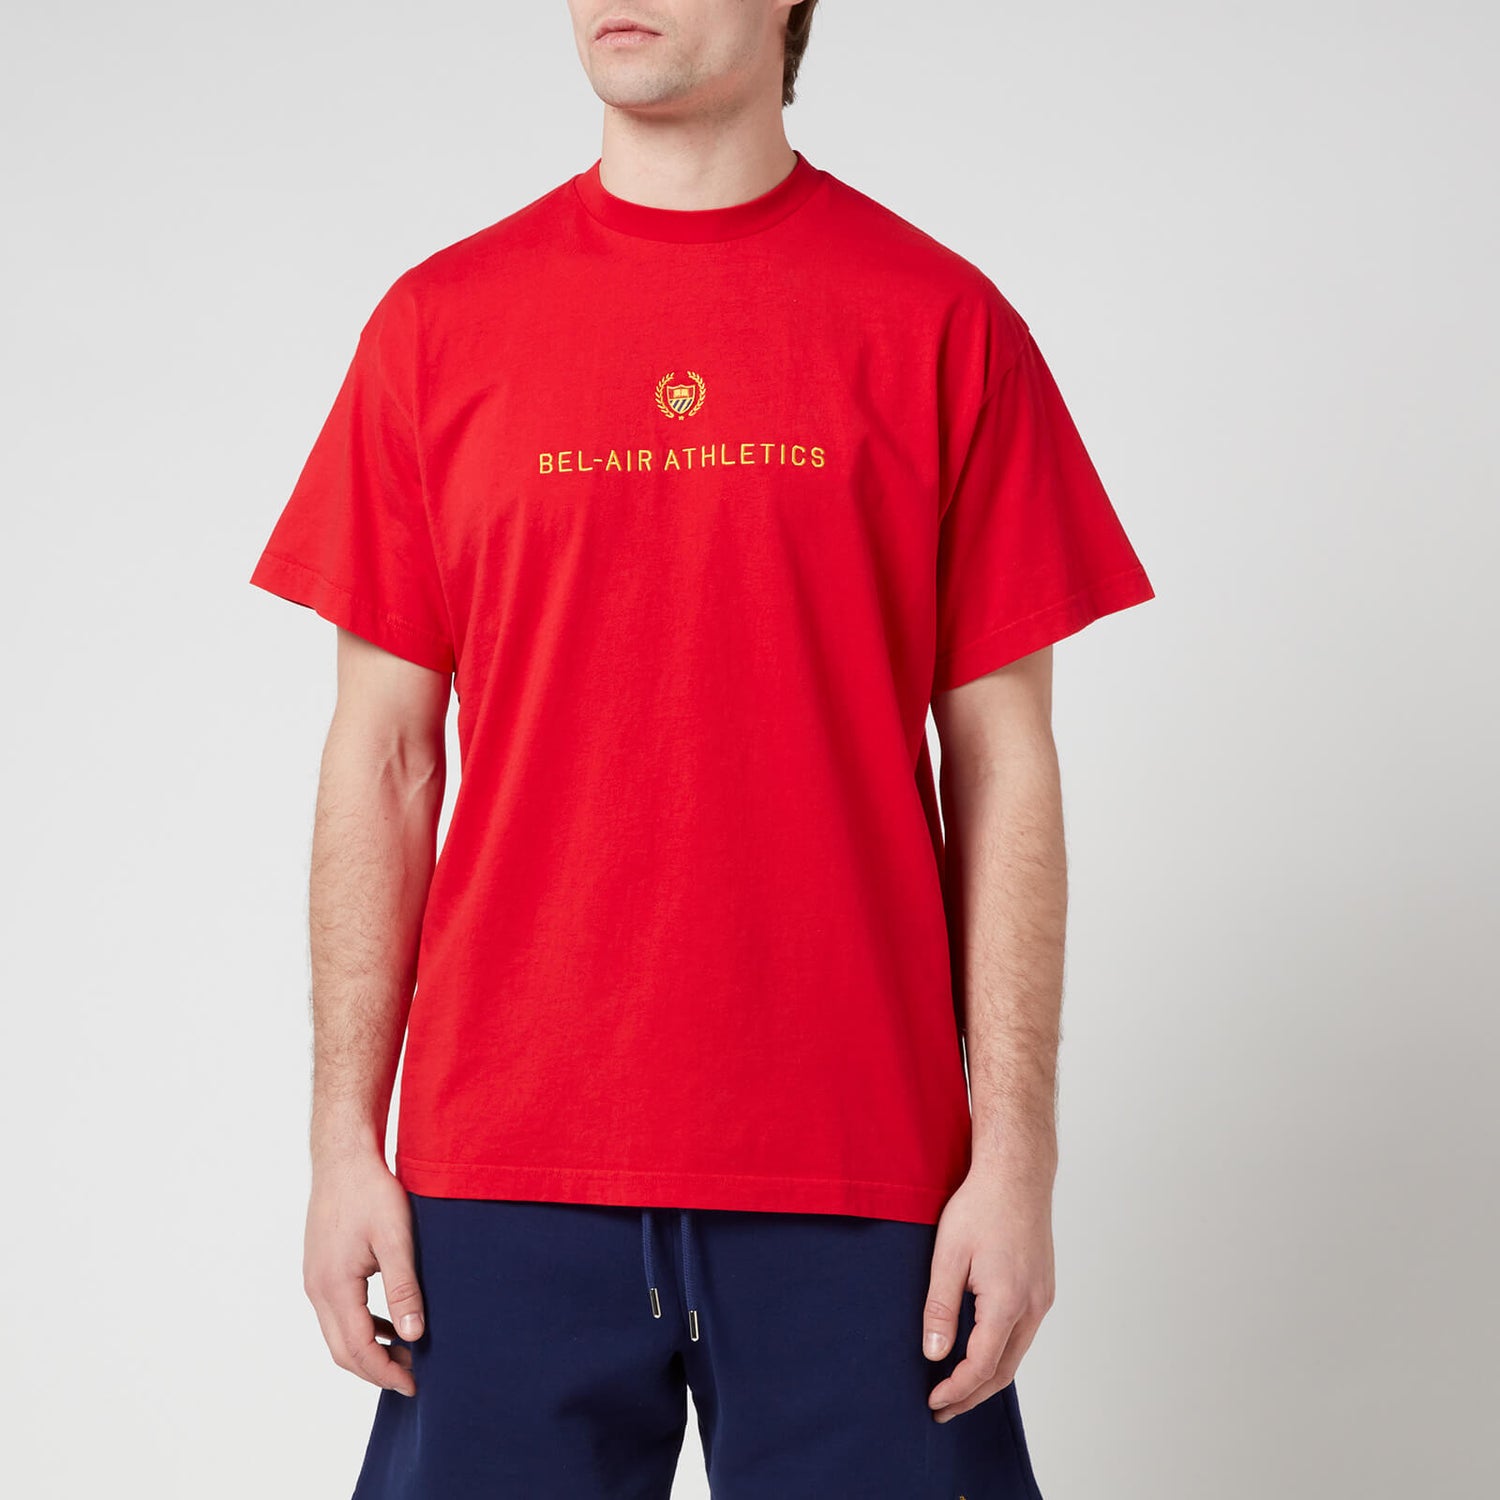 Bel-Air Athletics Men's Academy T-Shirt - Red - L